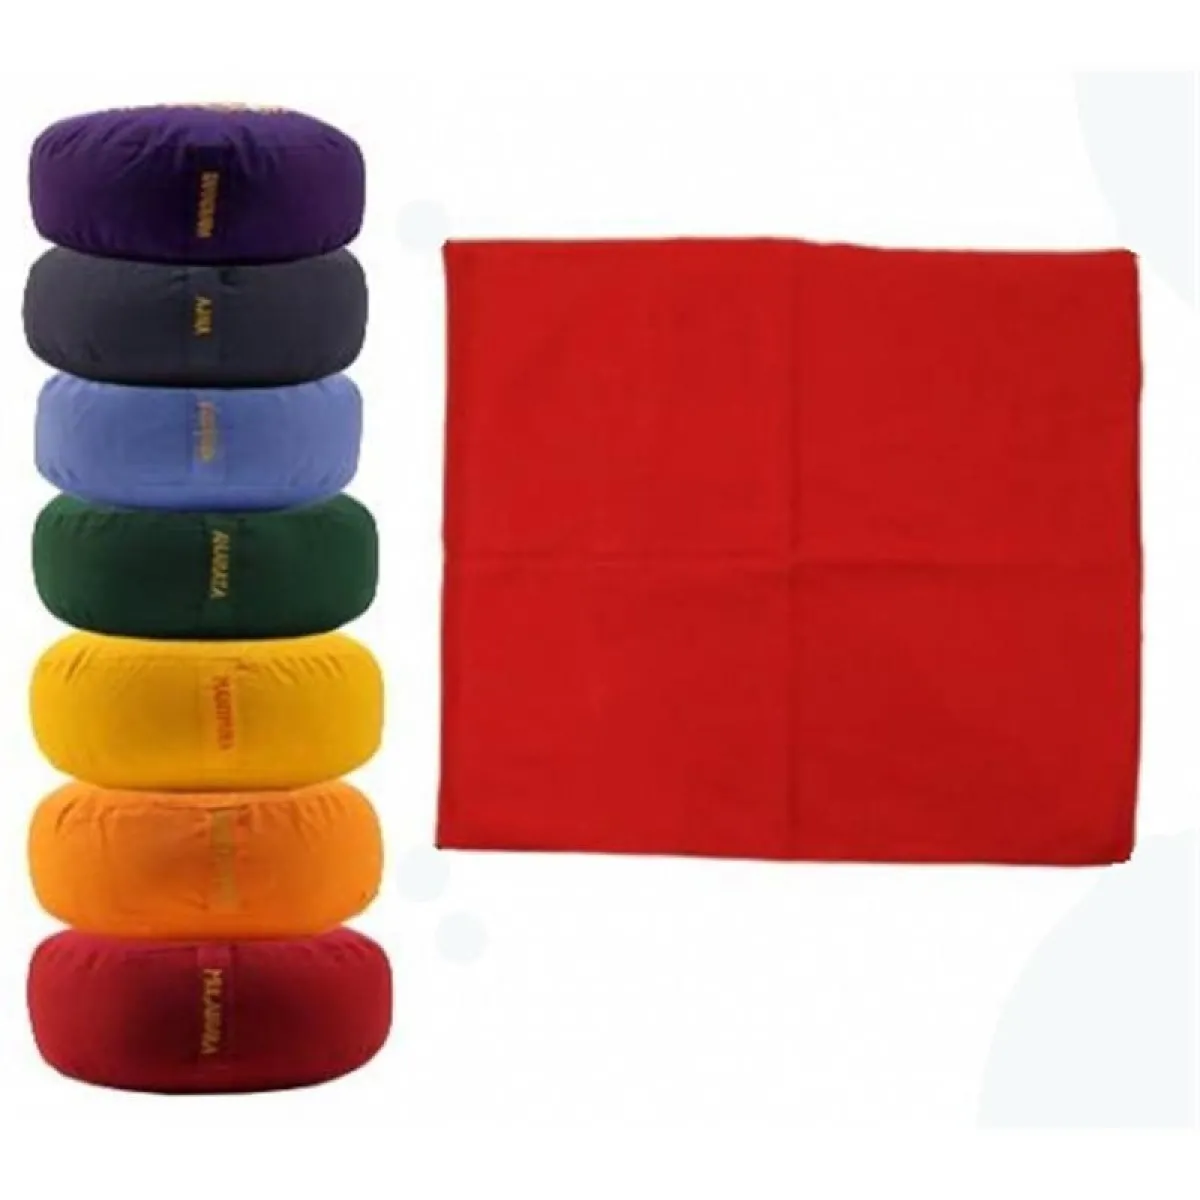 Meditation mats in the chakra colors